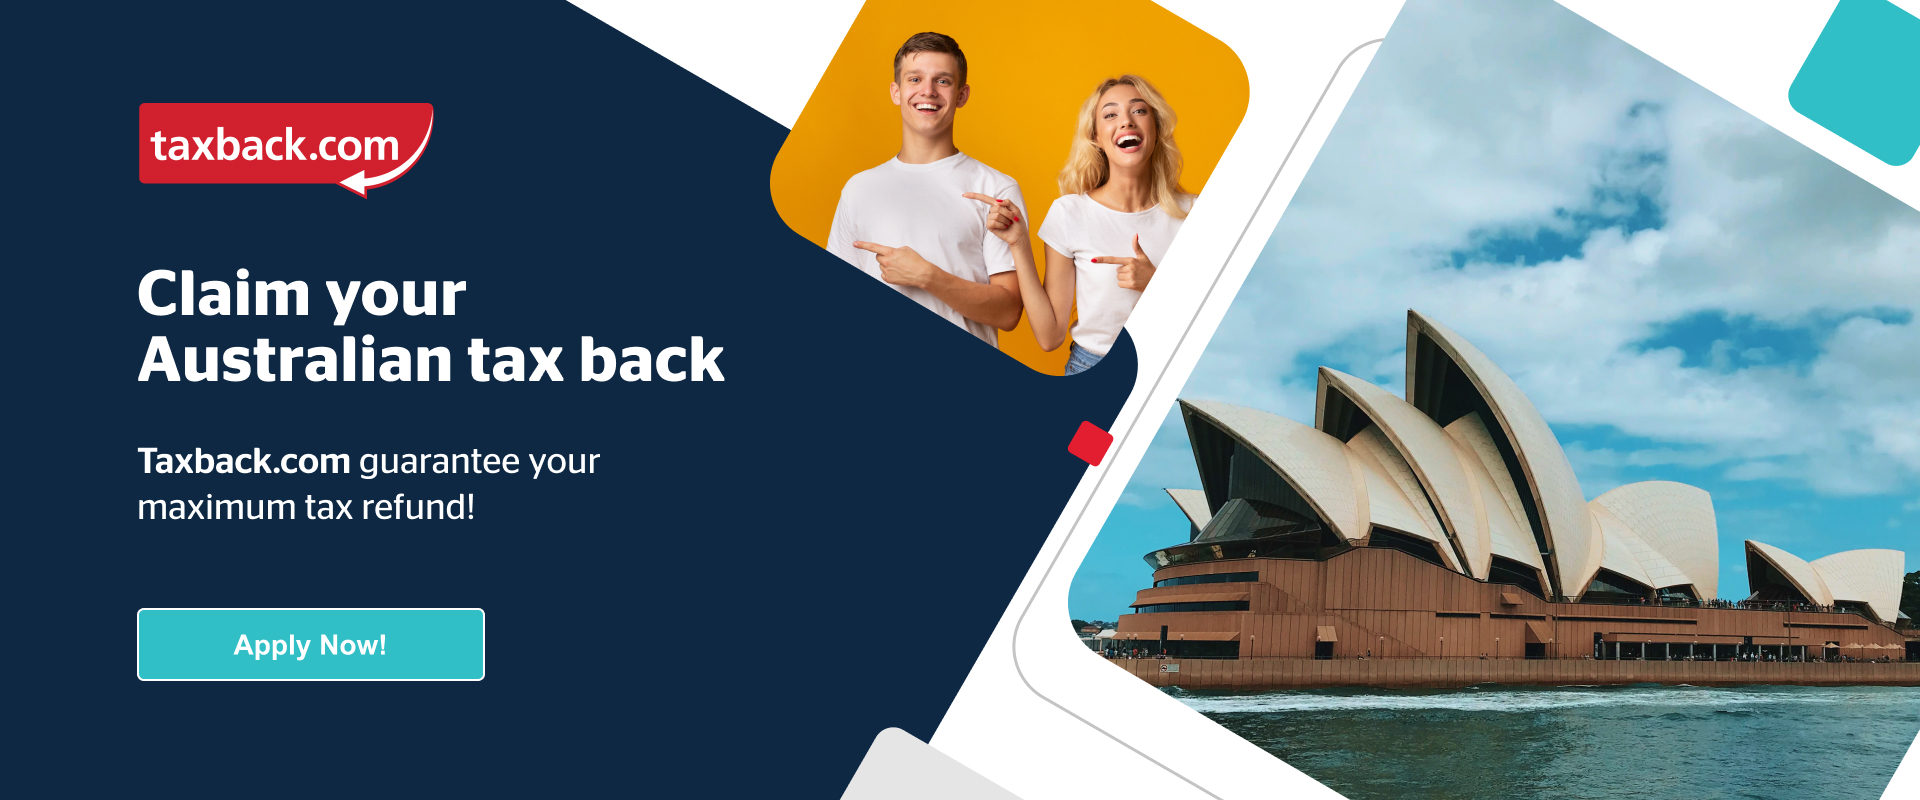 australia-tax-back-refund-rtw-backpackers